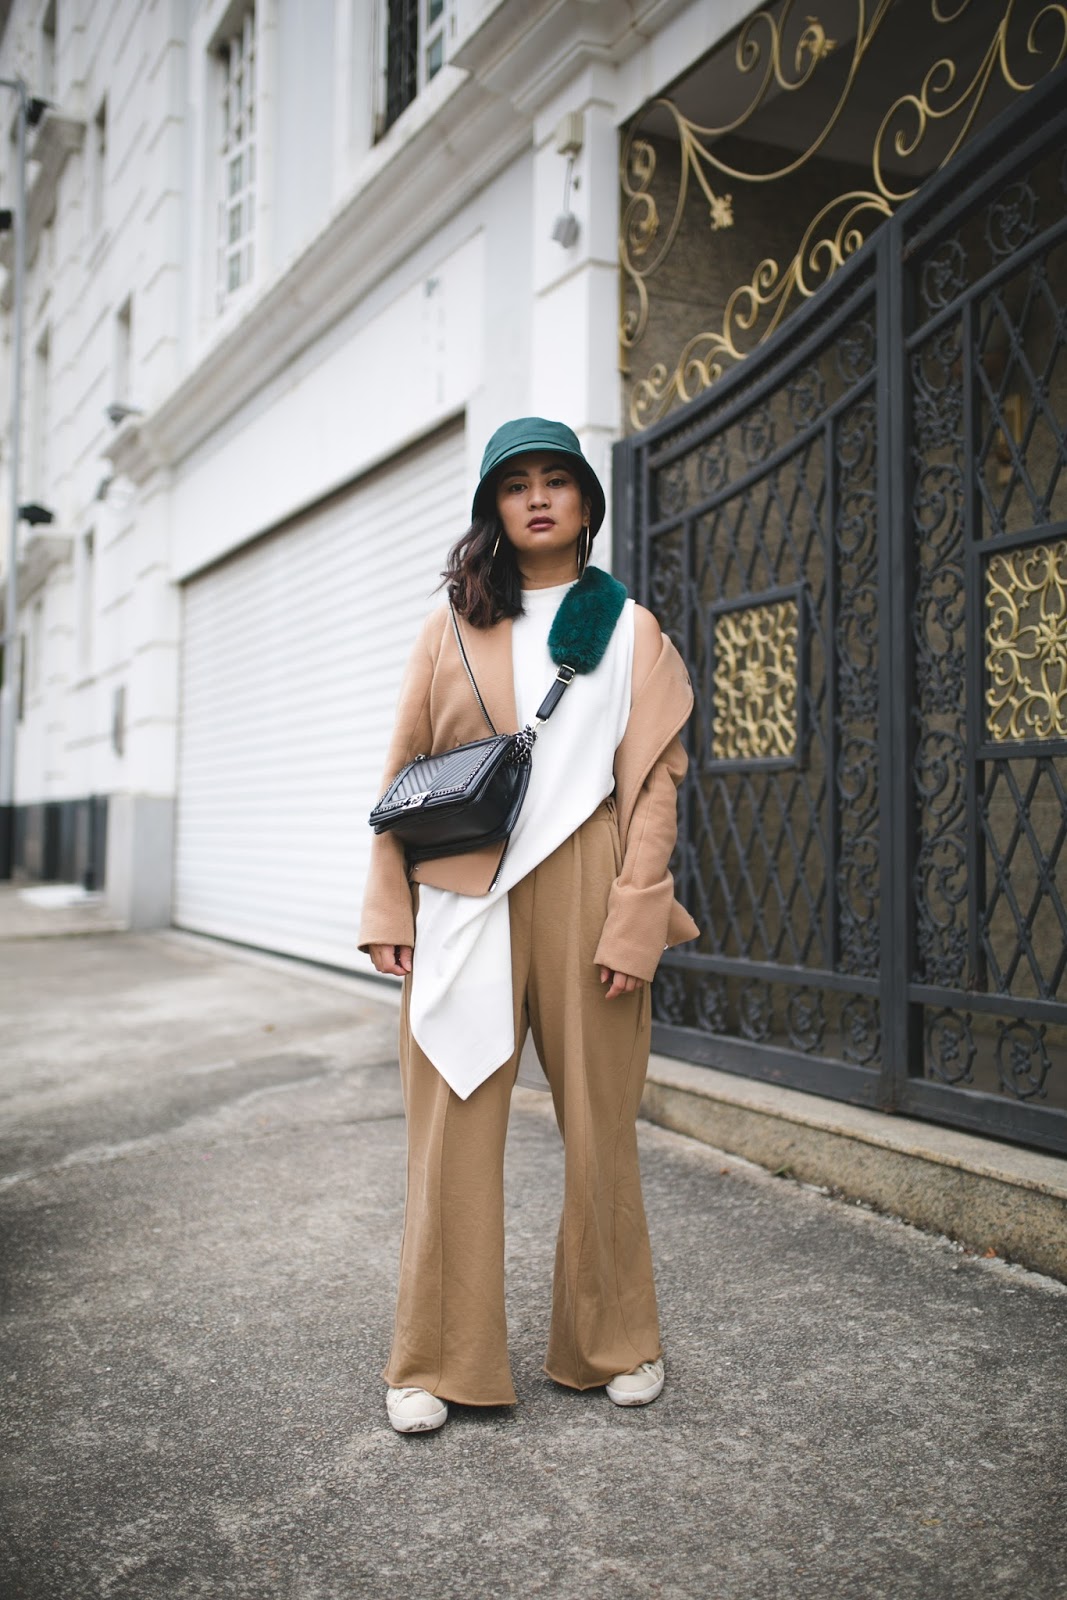 Macau Fashion Blogger wearing Layers of Neutrals